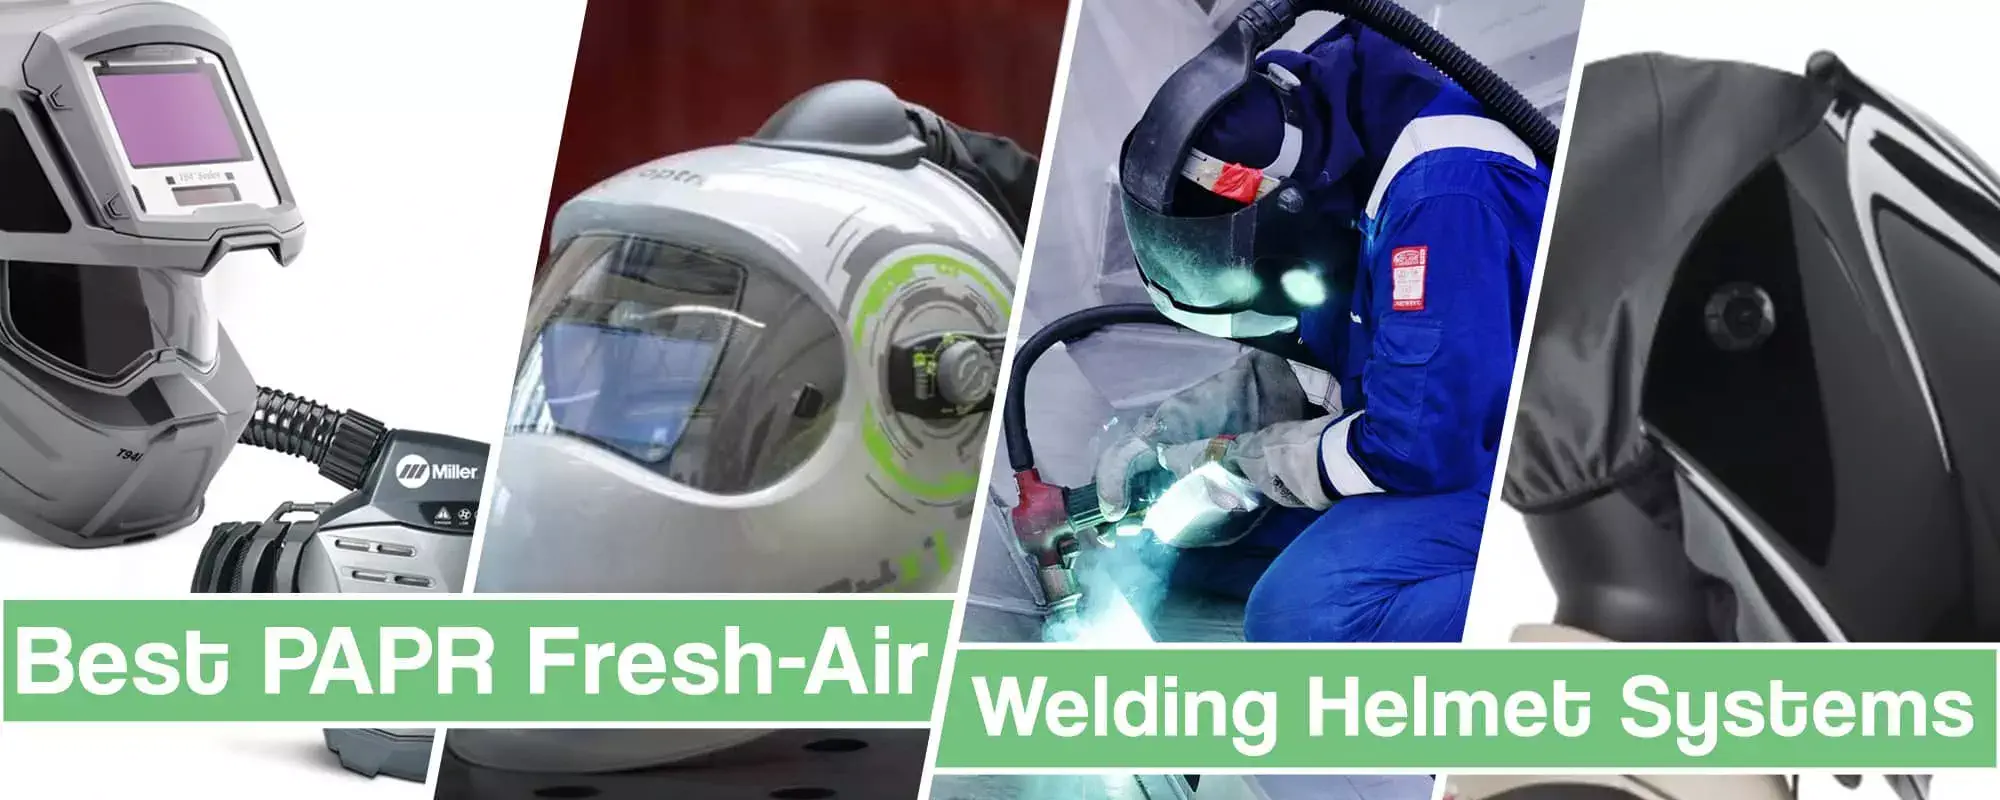 Best PAPR Welding Helmet – Fresh Air Fed Hood Buying Guide and Reviews